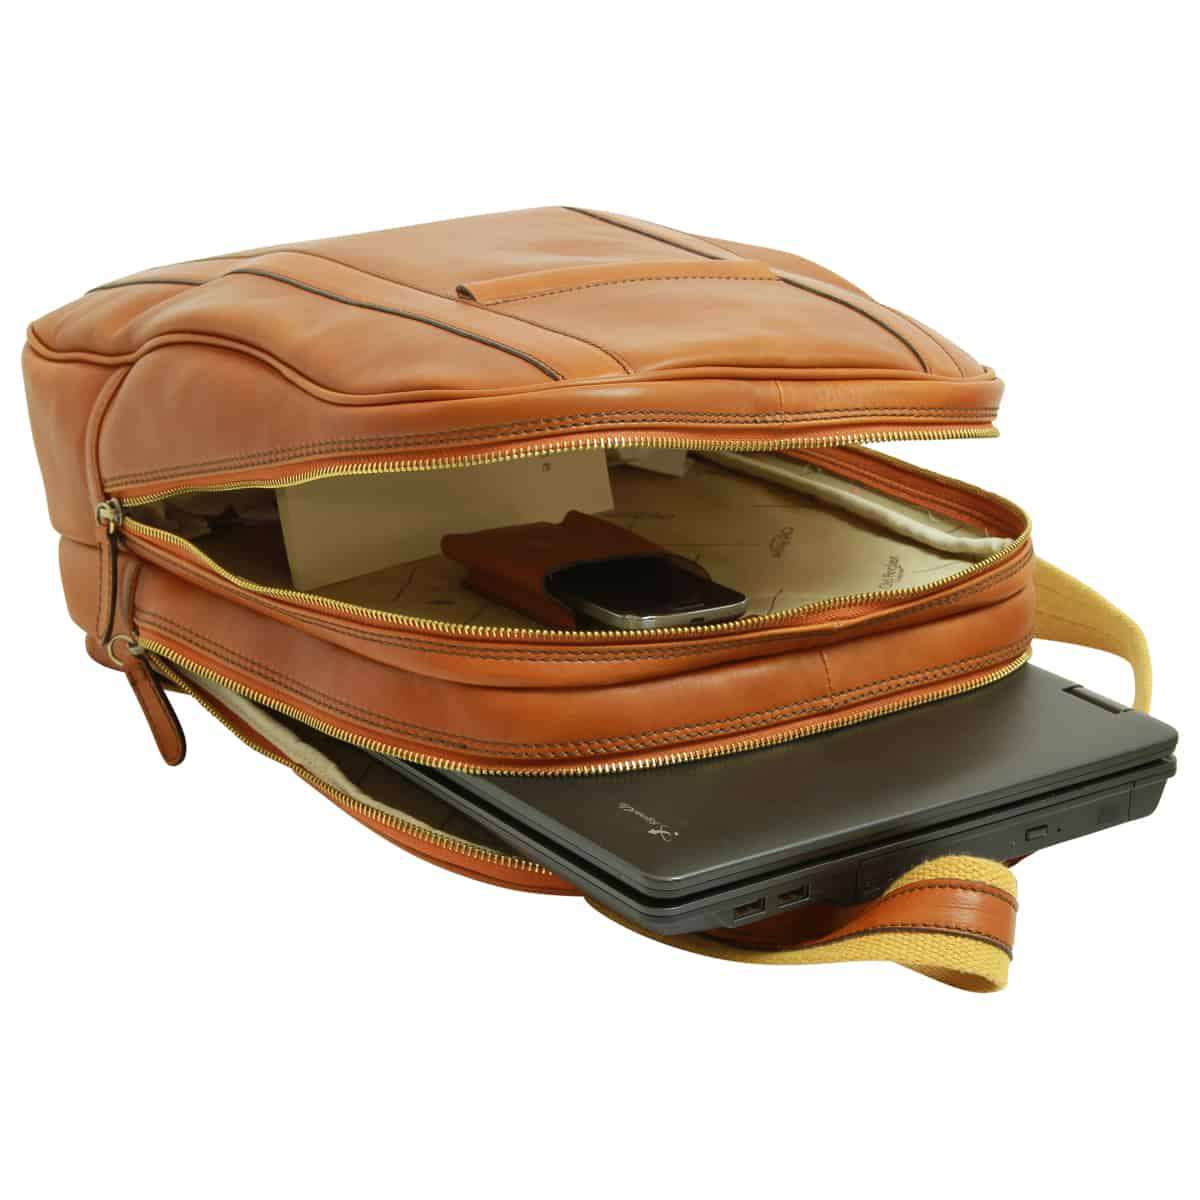 Soft Calfskin Leather Laptop Backpack - Gold | 031491CO US | Old Angler Firenze